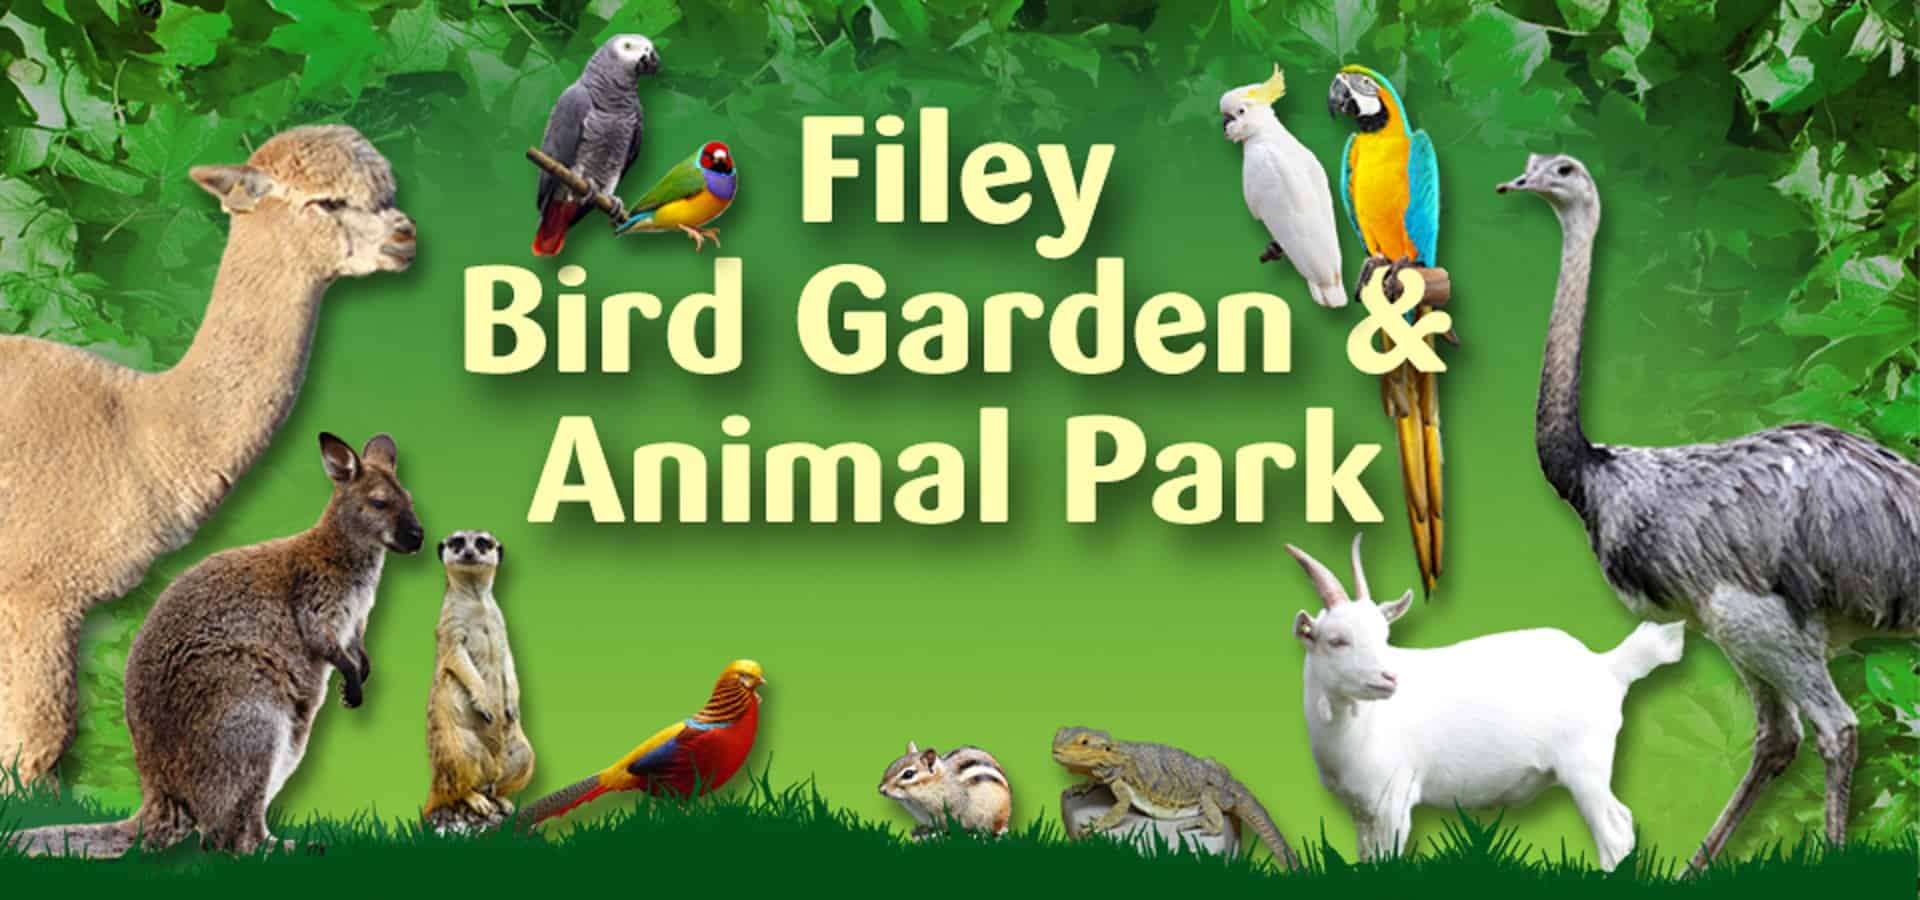 Filey Bird Garden and Animal Park in UK